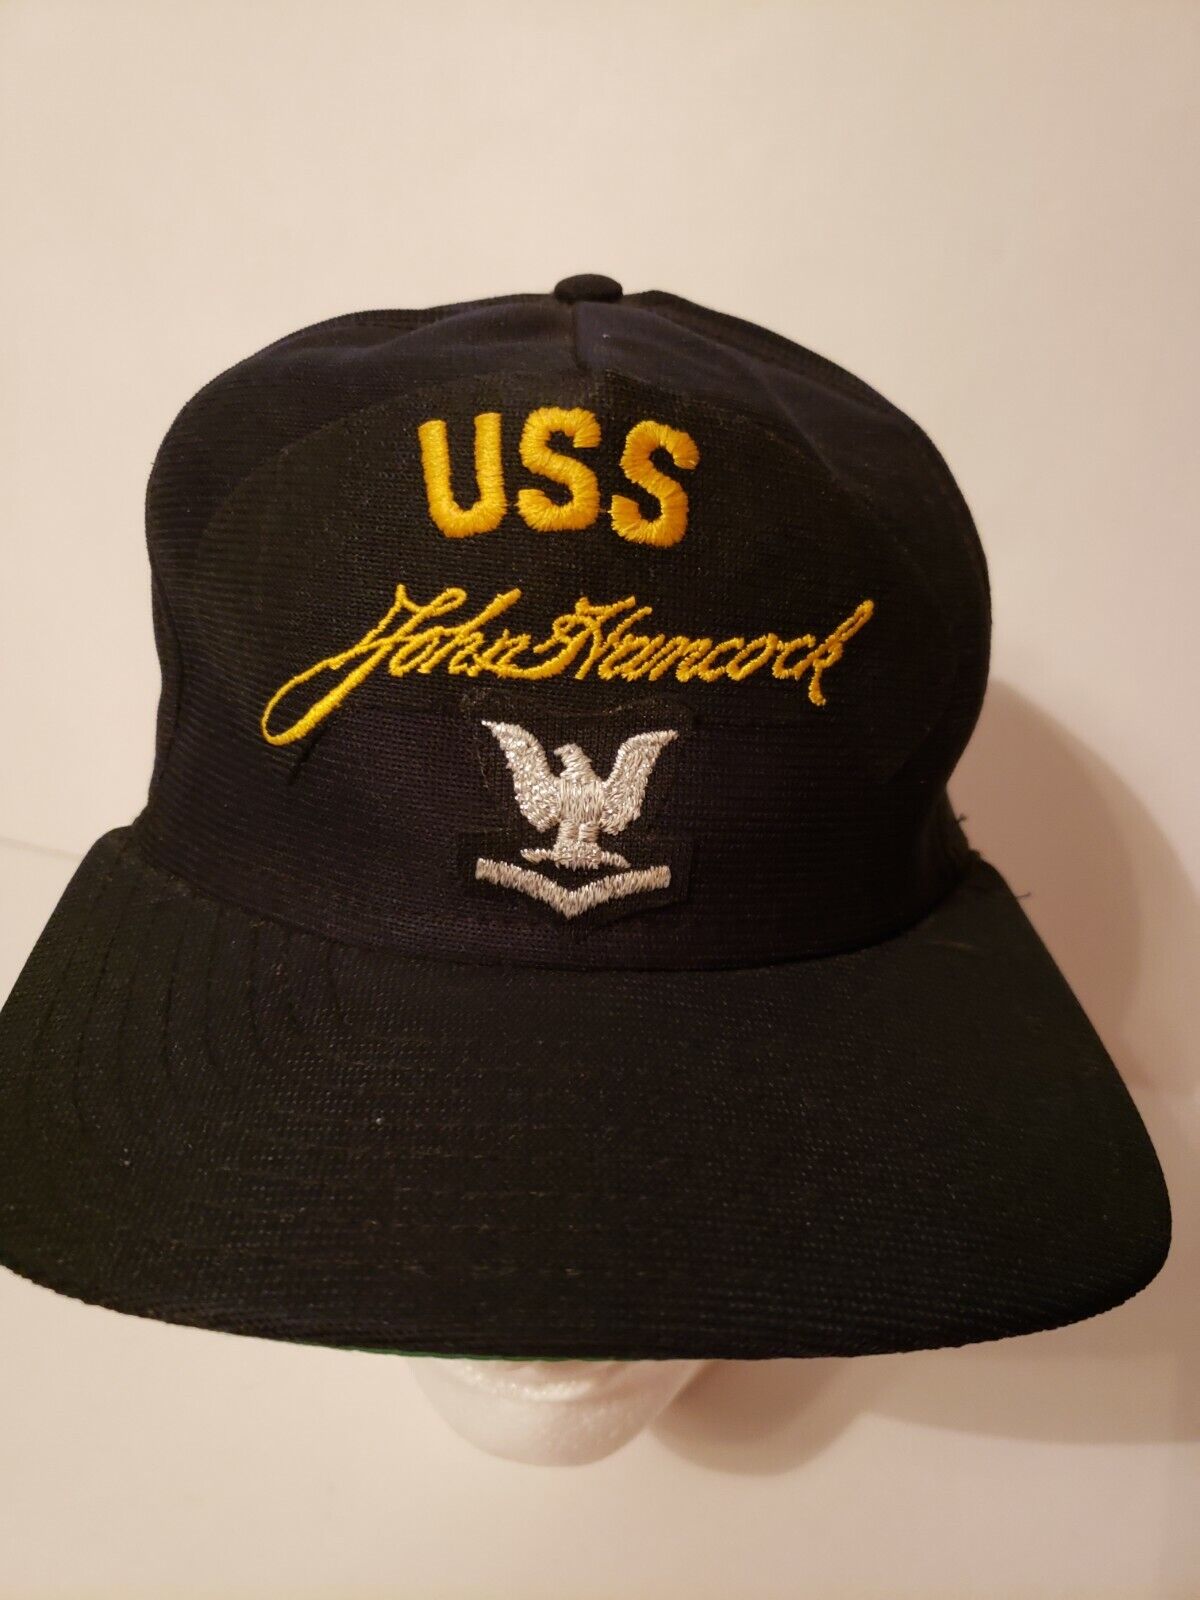 USS John Hancock Adjustable Hat/Cap in Black